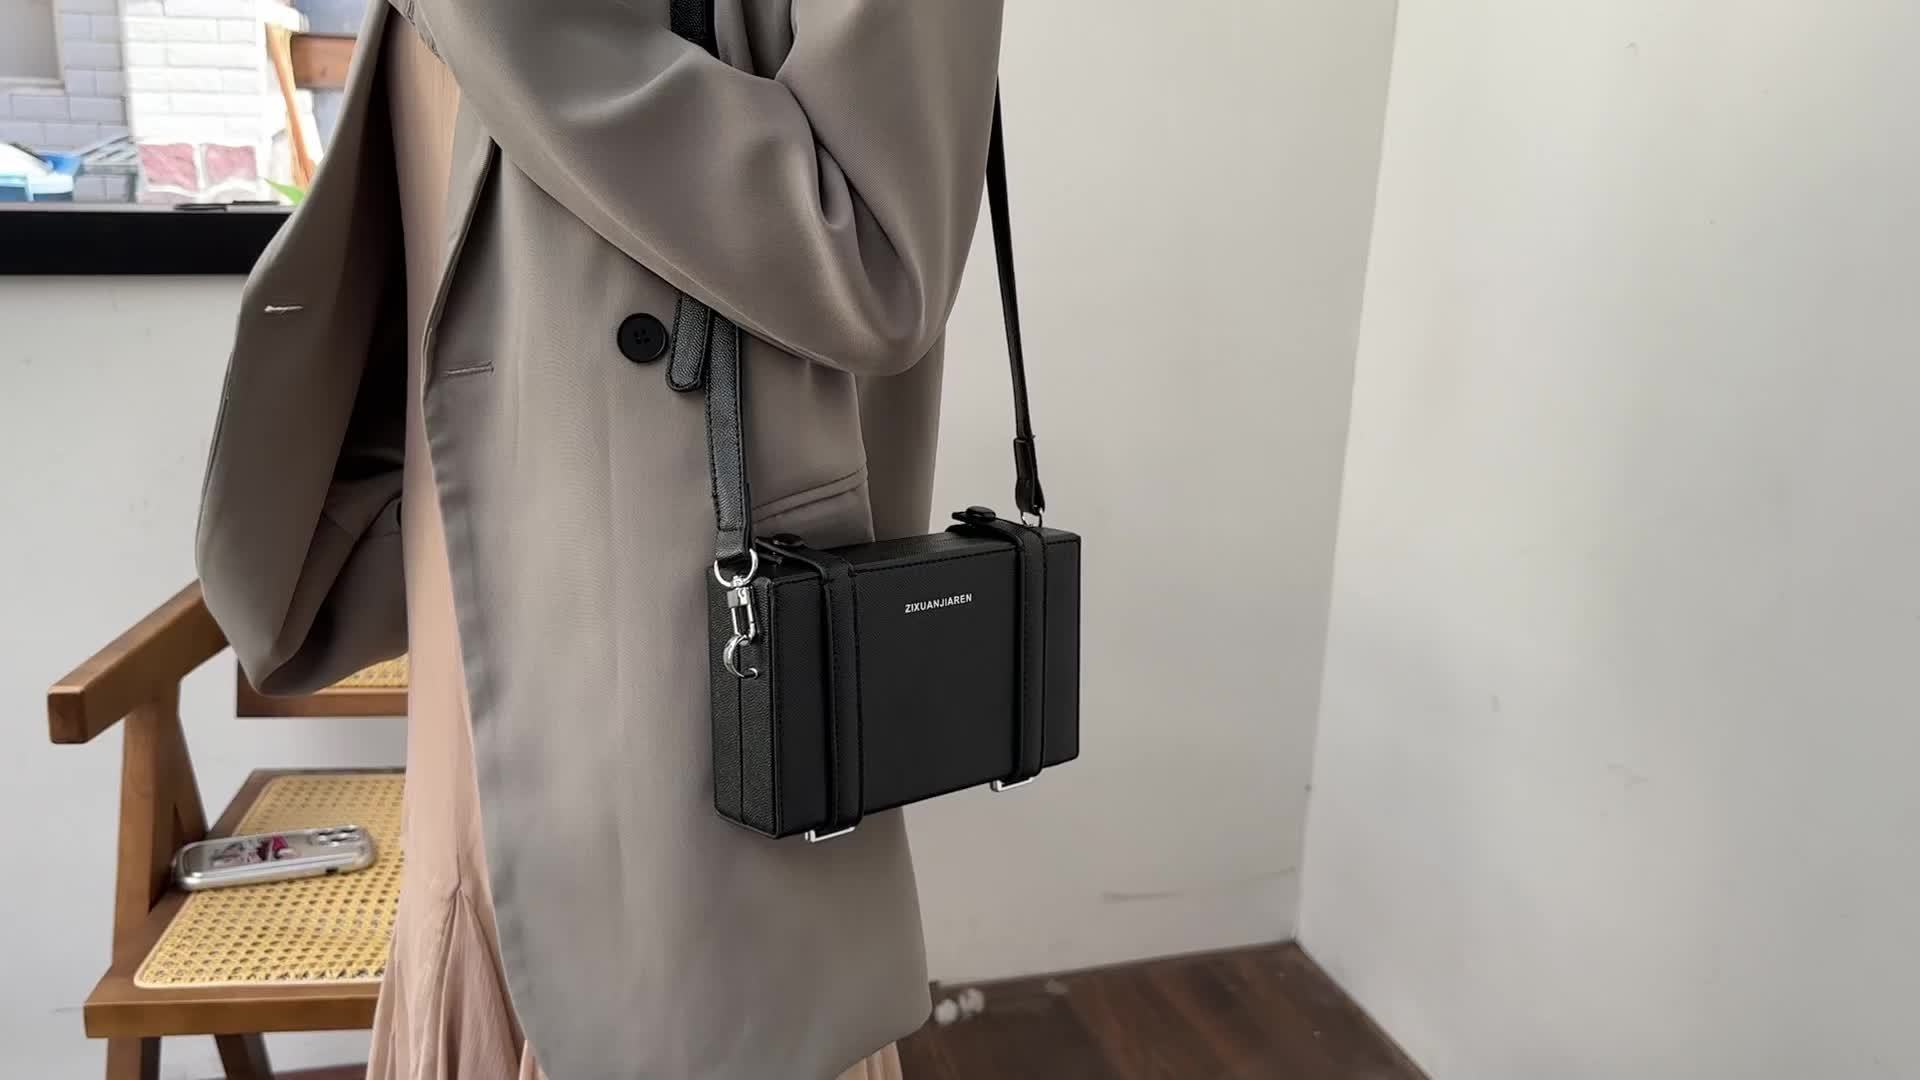 Retro Box Shape Shoulder Bag, Mini Letter Print Clutch Purse, Fashion Square  Crossbody Bag For Women - Temu